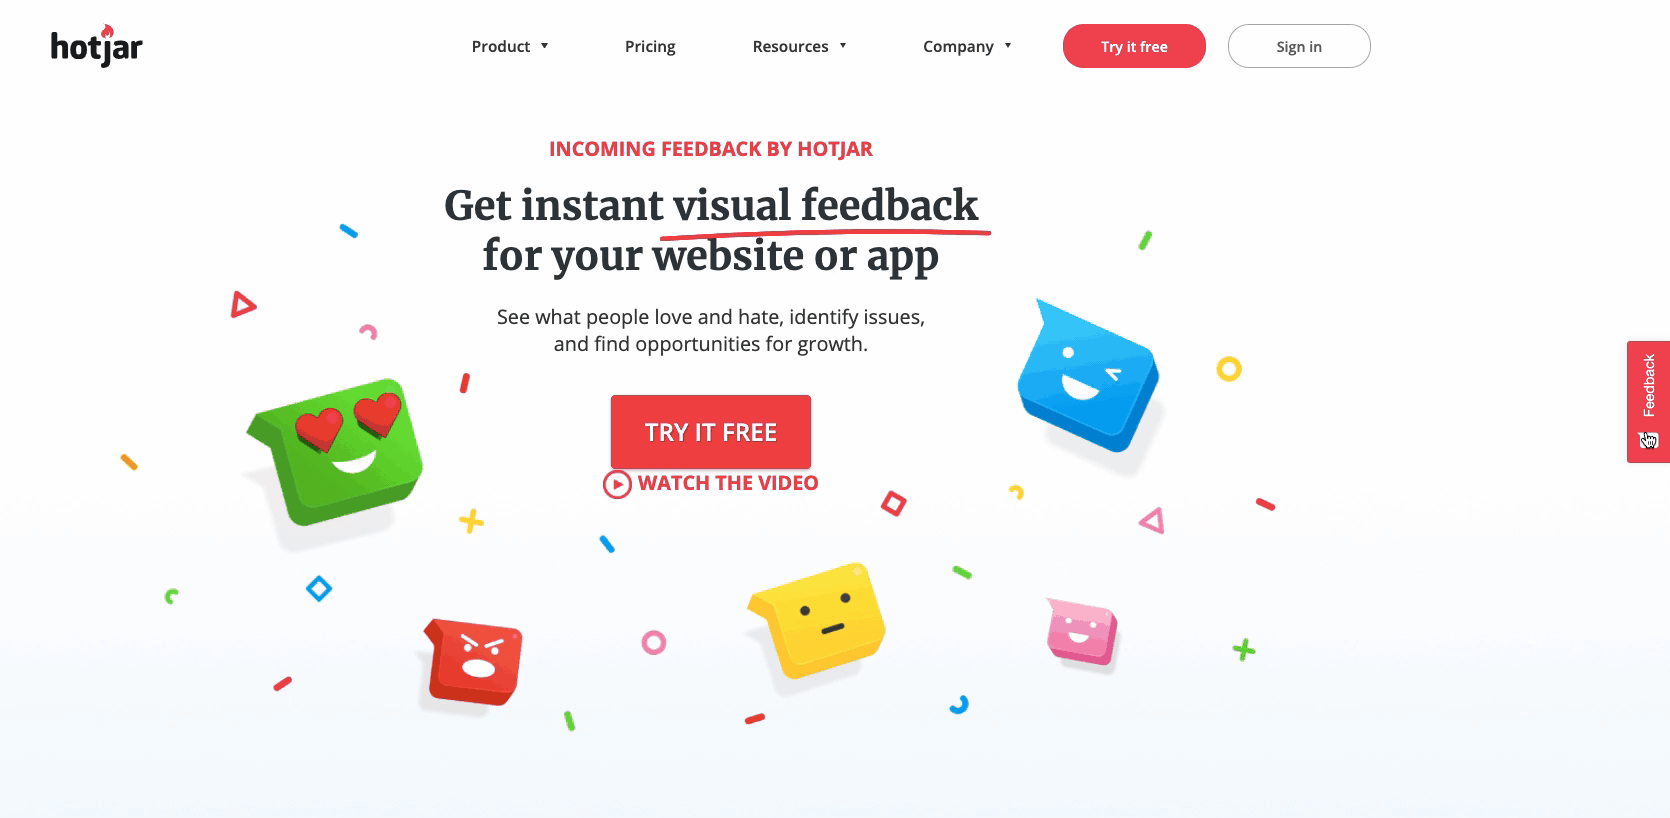 #Hotjar's incoming feedback widget in action